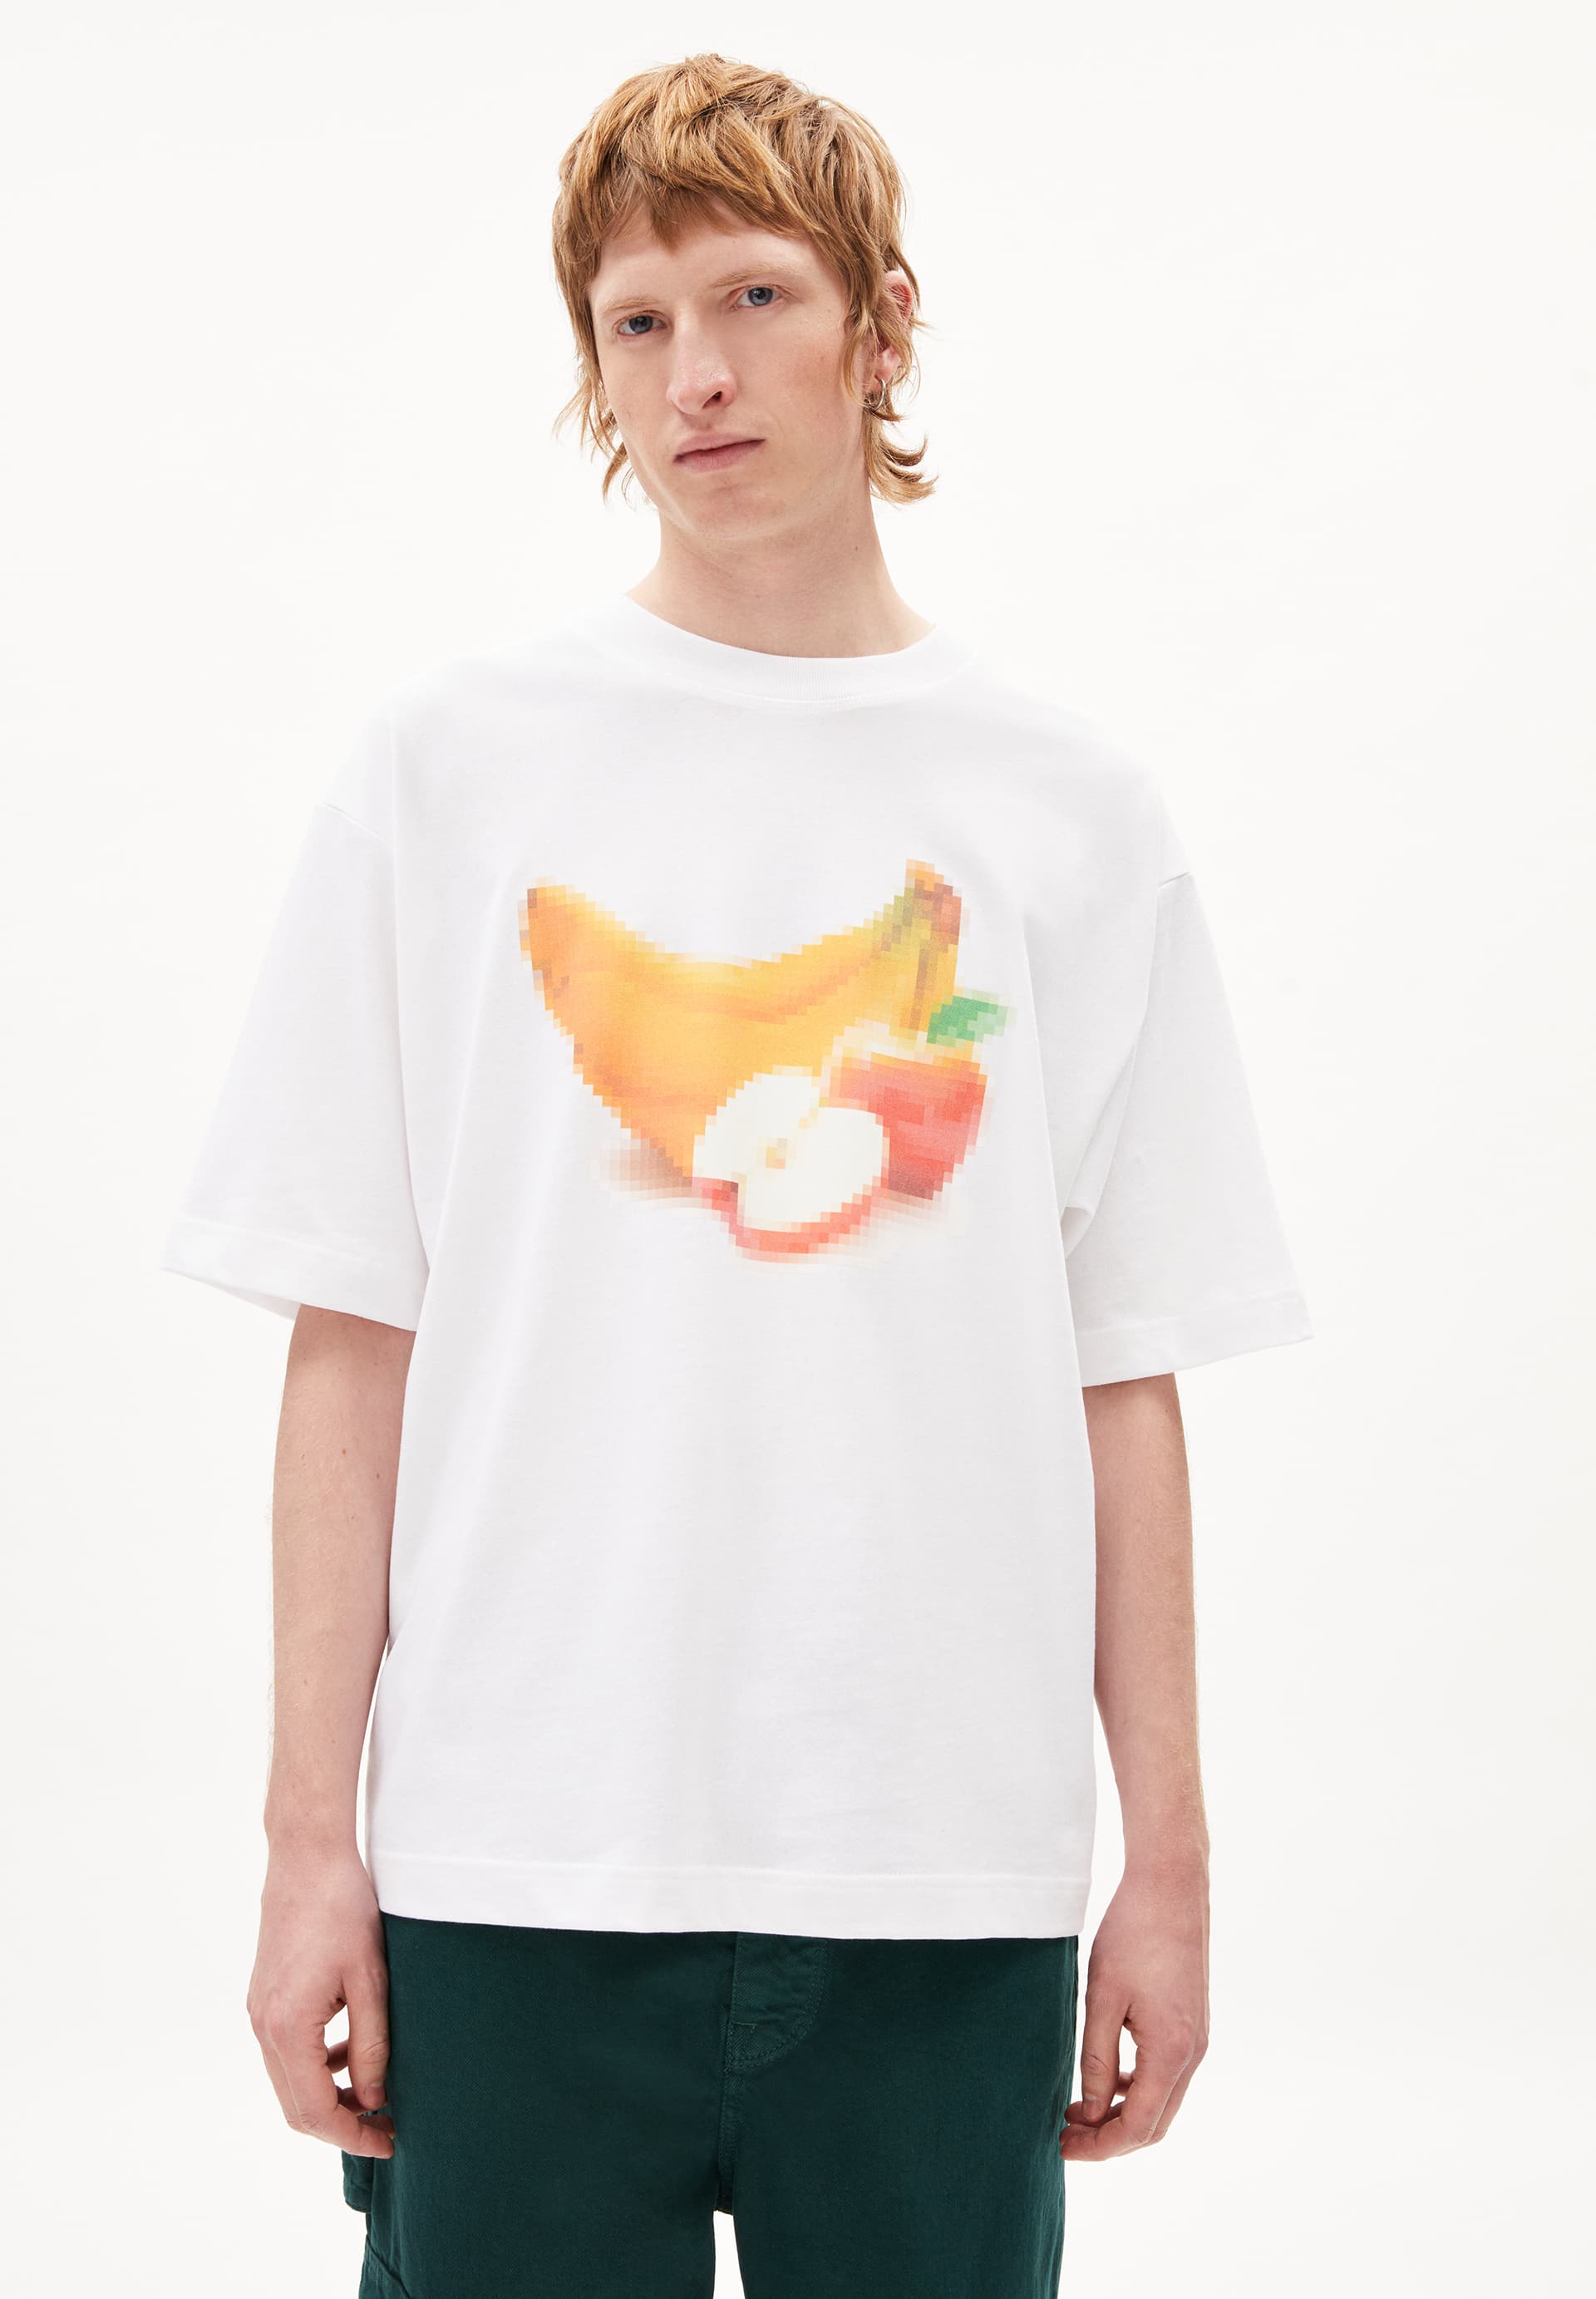 OLAAN PIXXEL FRUITS Heavyweight T-Shirt Oversized Fit made of Organic Cotton Mix